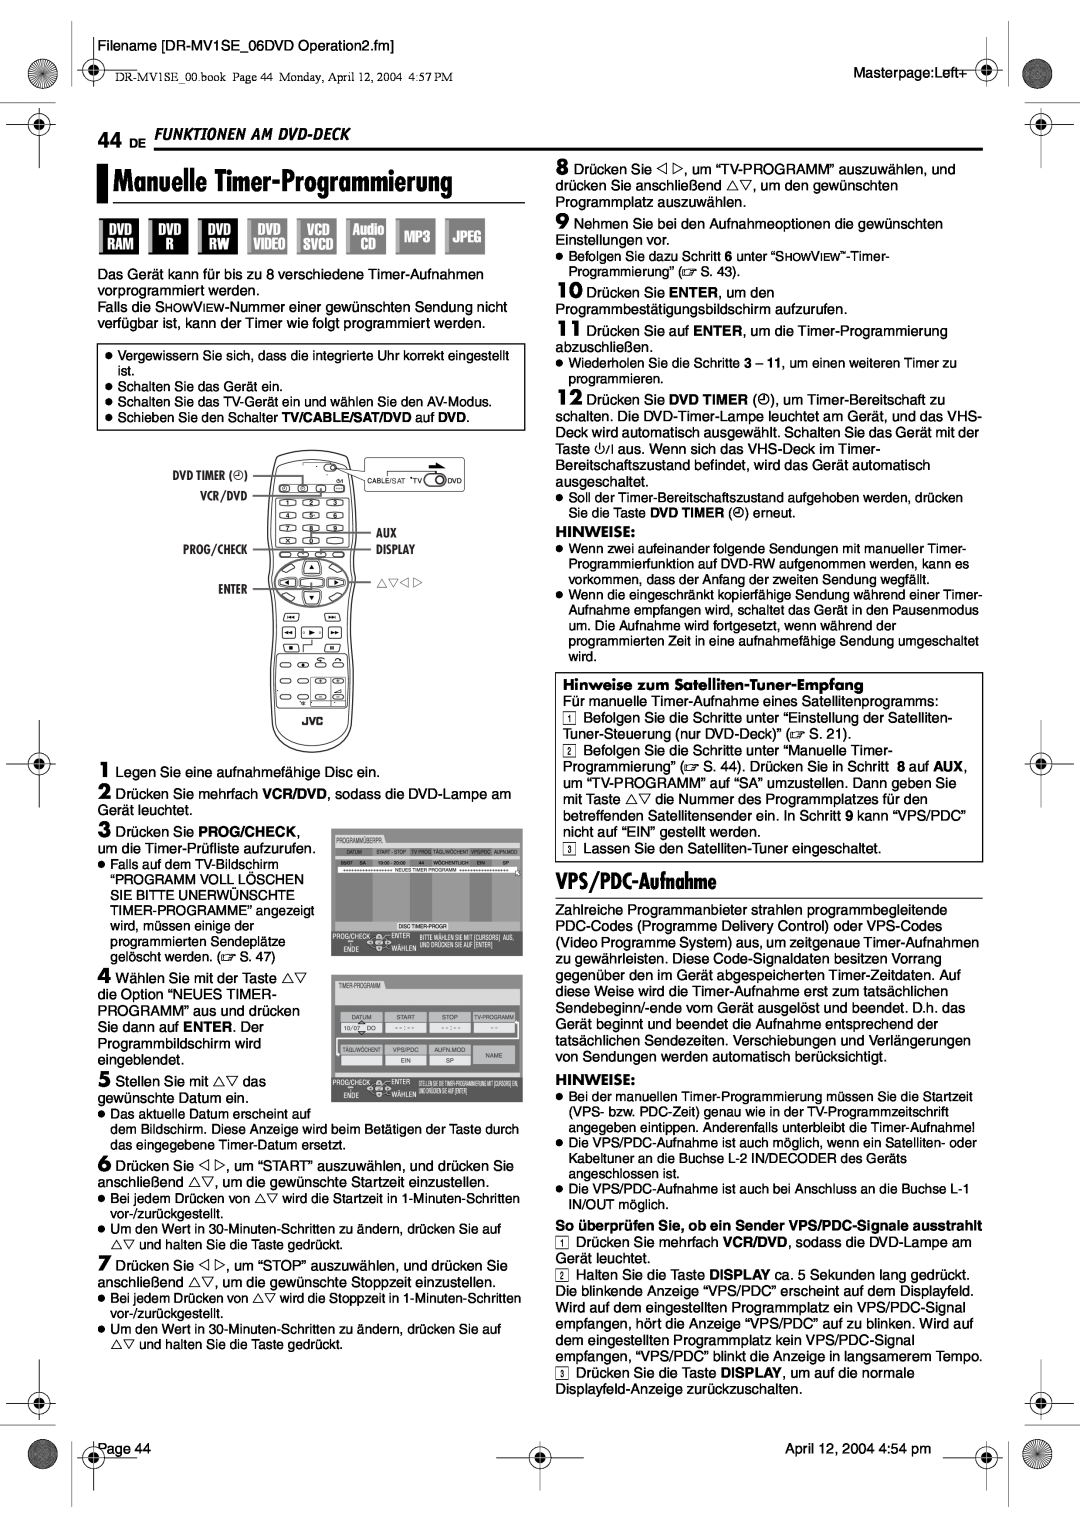 JVC DR-MV1S manual Manuelle Timer-Programmierung, VPS/PDC-Aufnahme, De Funktionen Am Dvd-Deck, Hinweise 